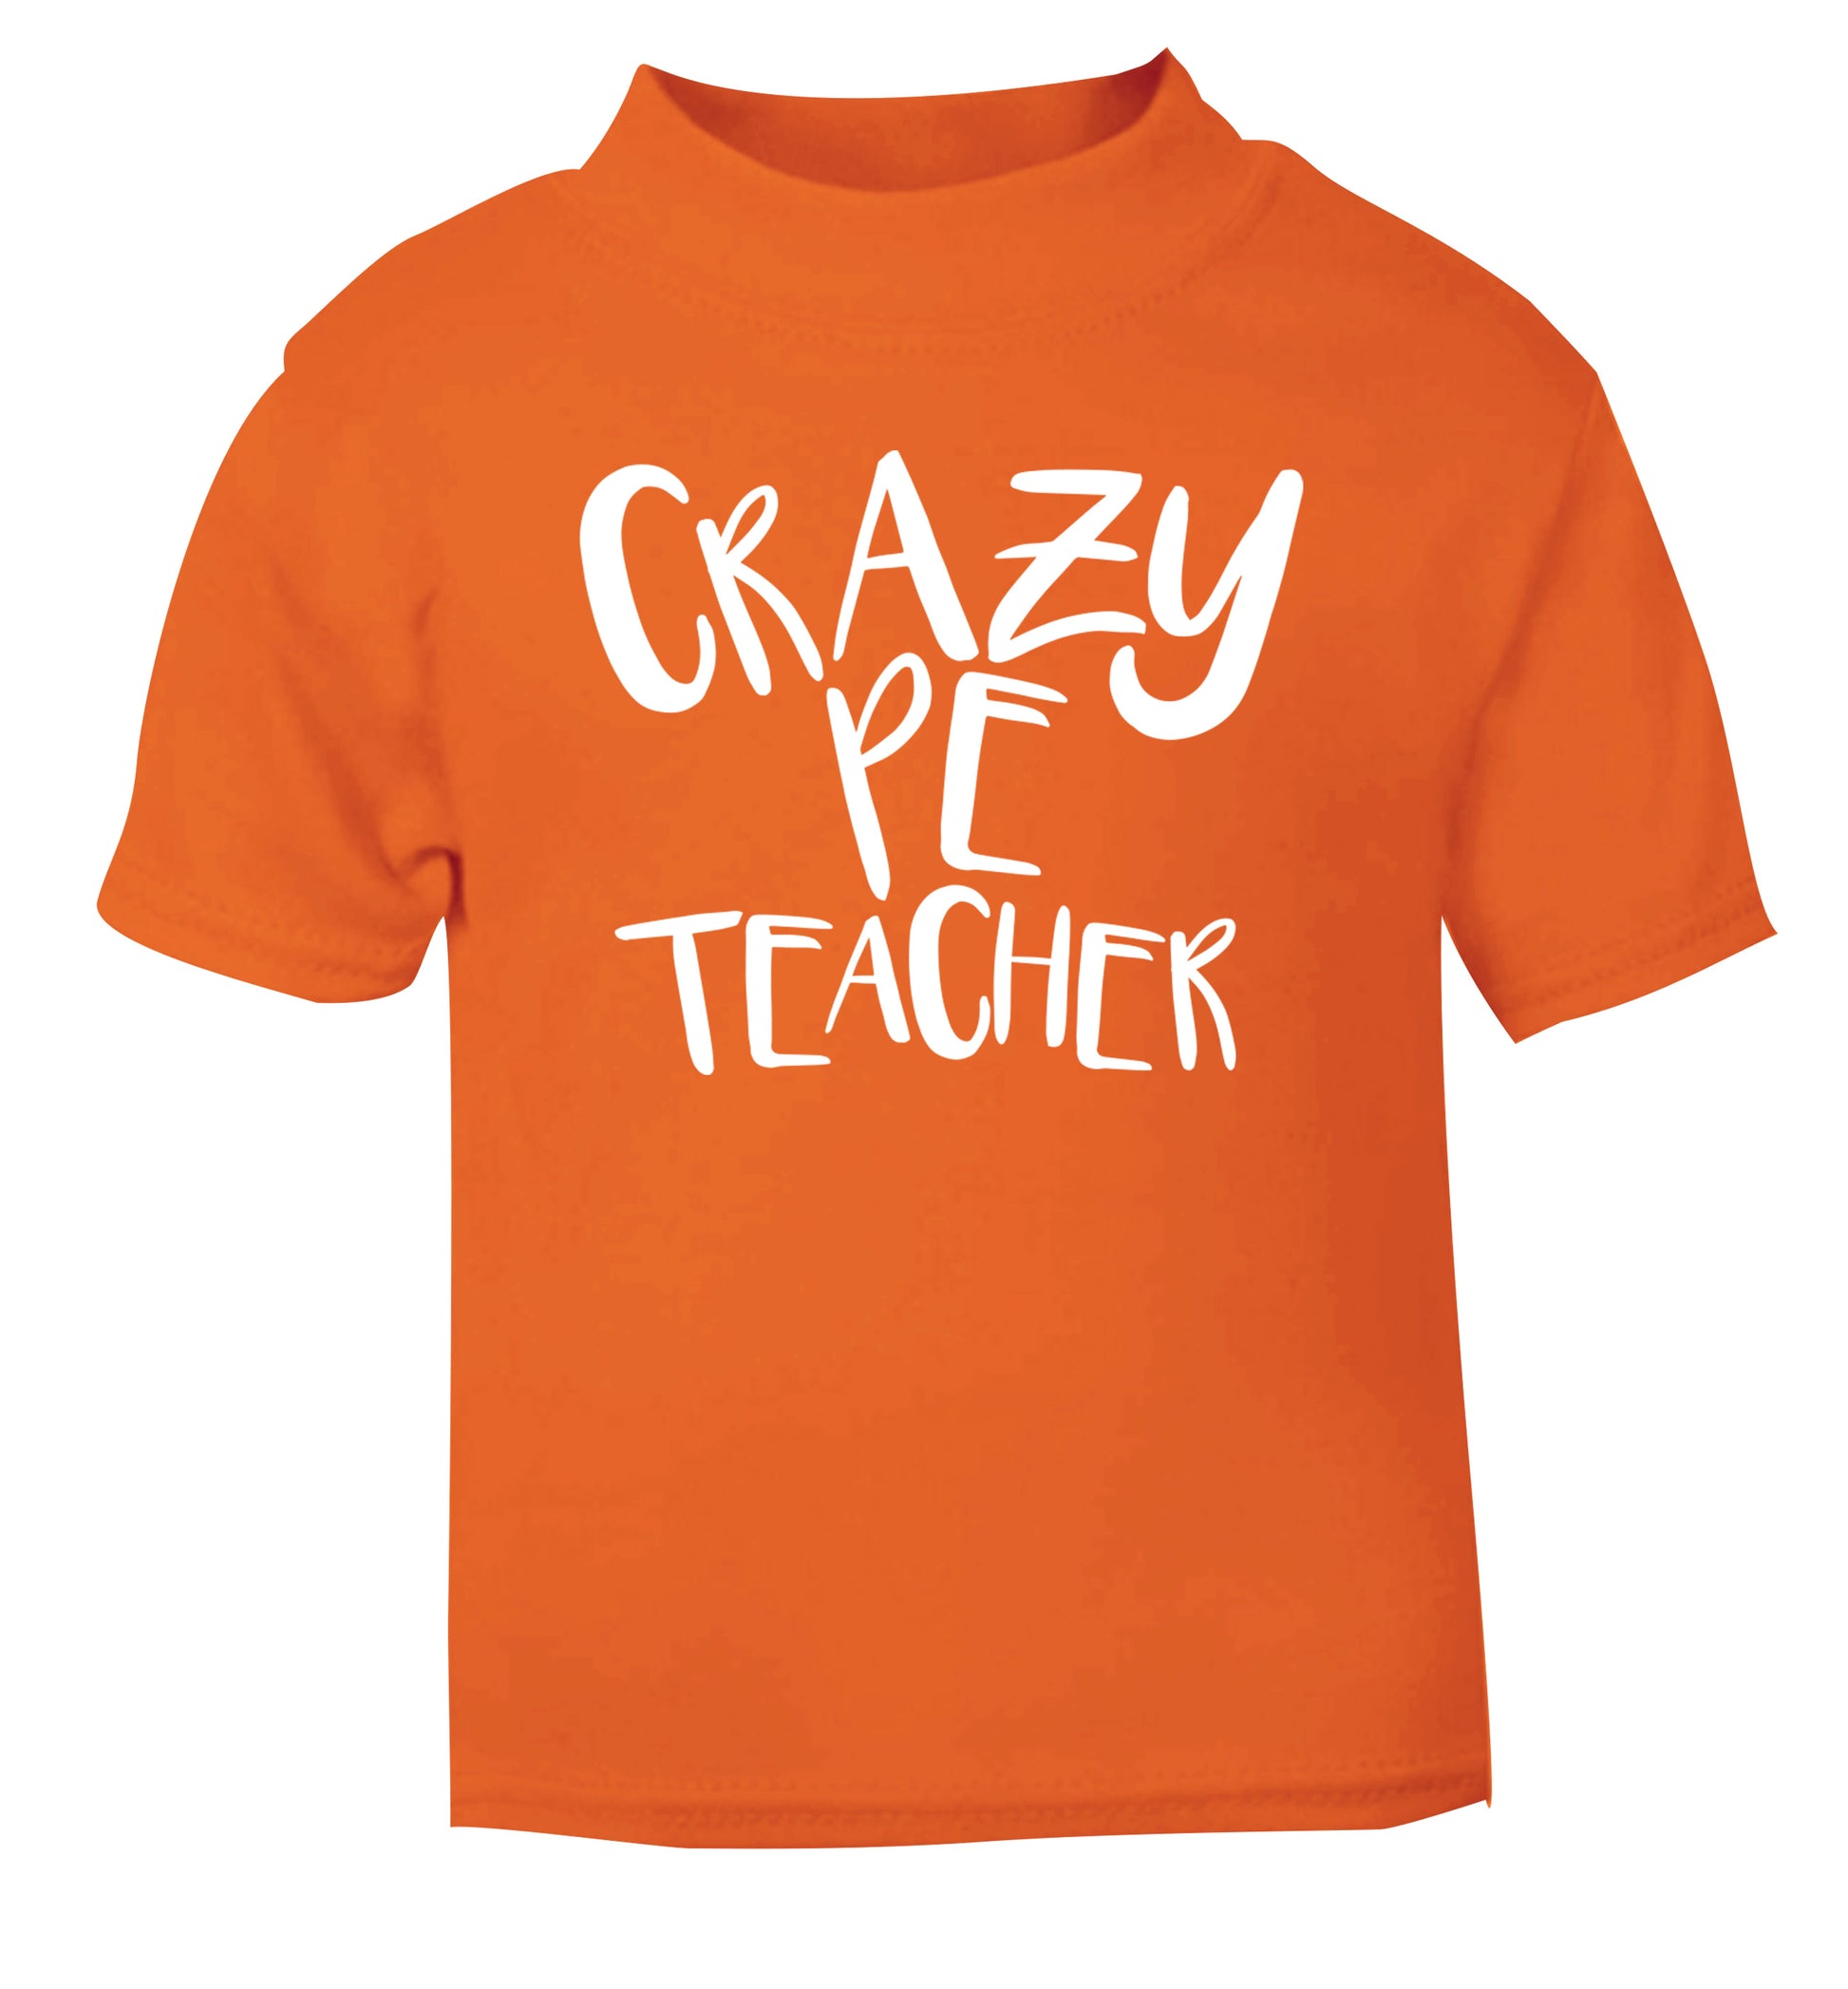 Crazy PE teacher orange Baby Toddler Tshirt 2 Years